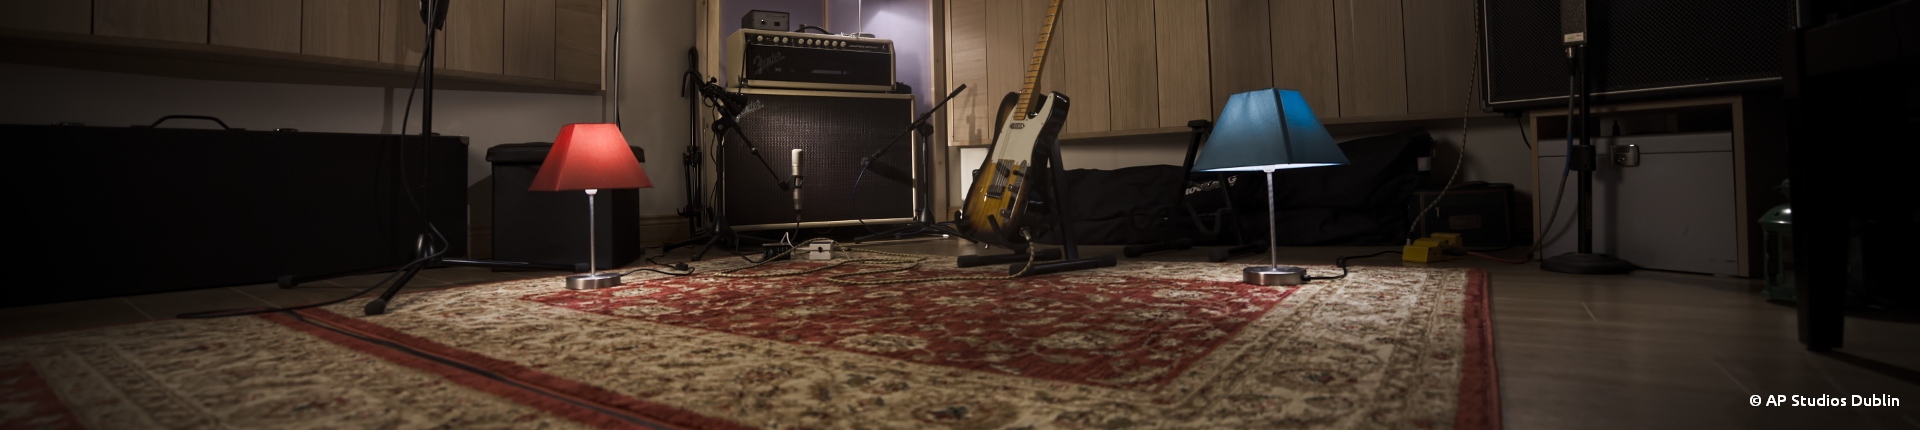 AP Recording Studios Dublin Electric Guitar Set Up